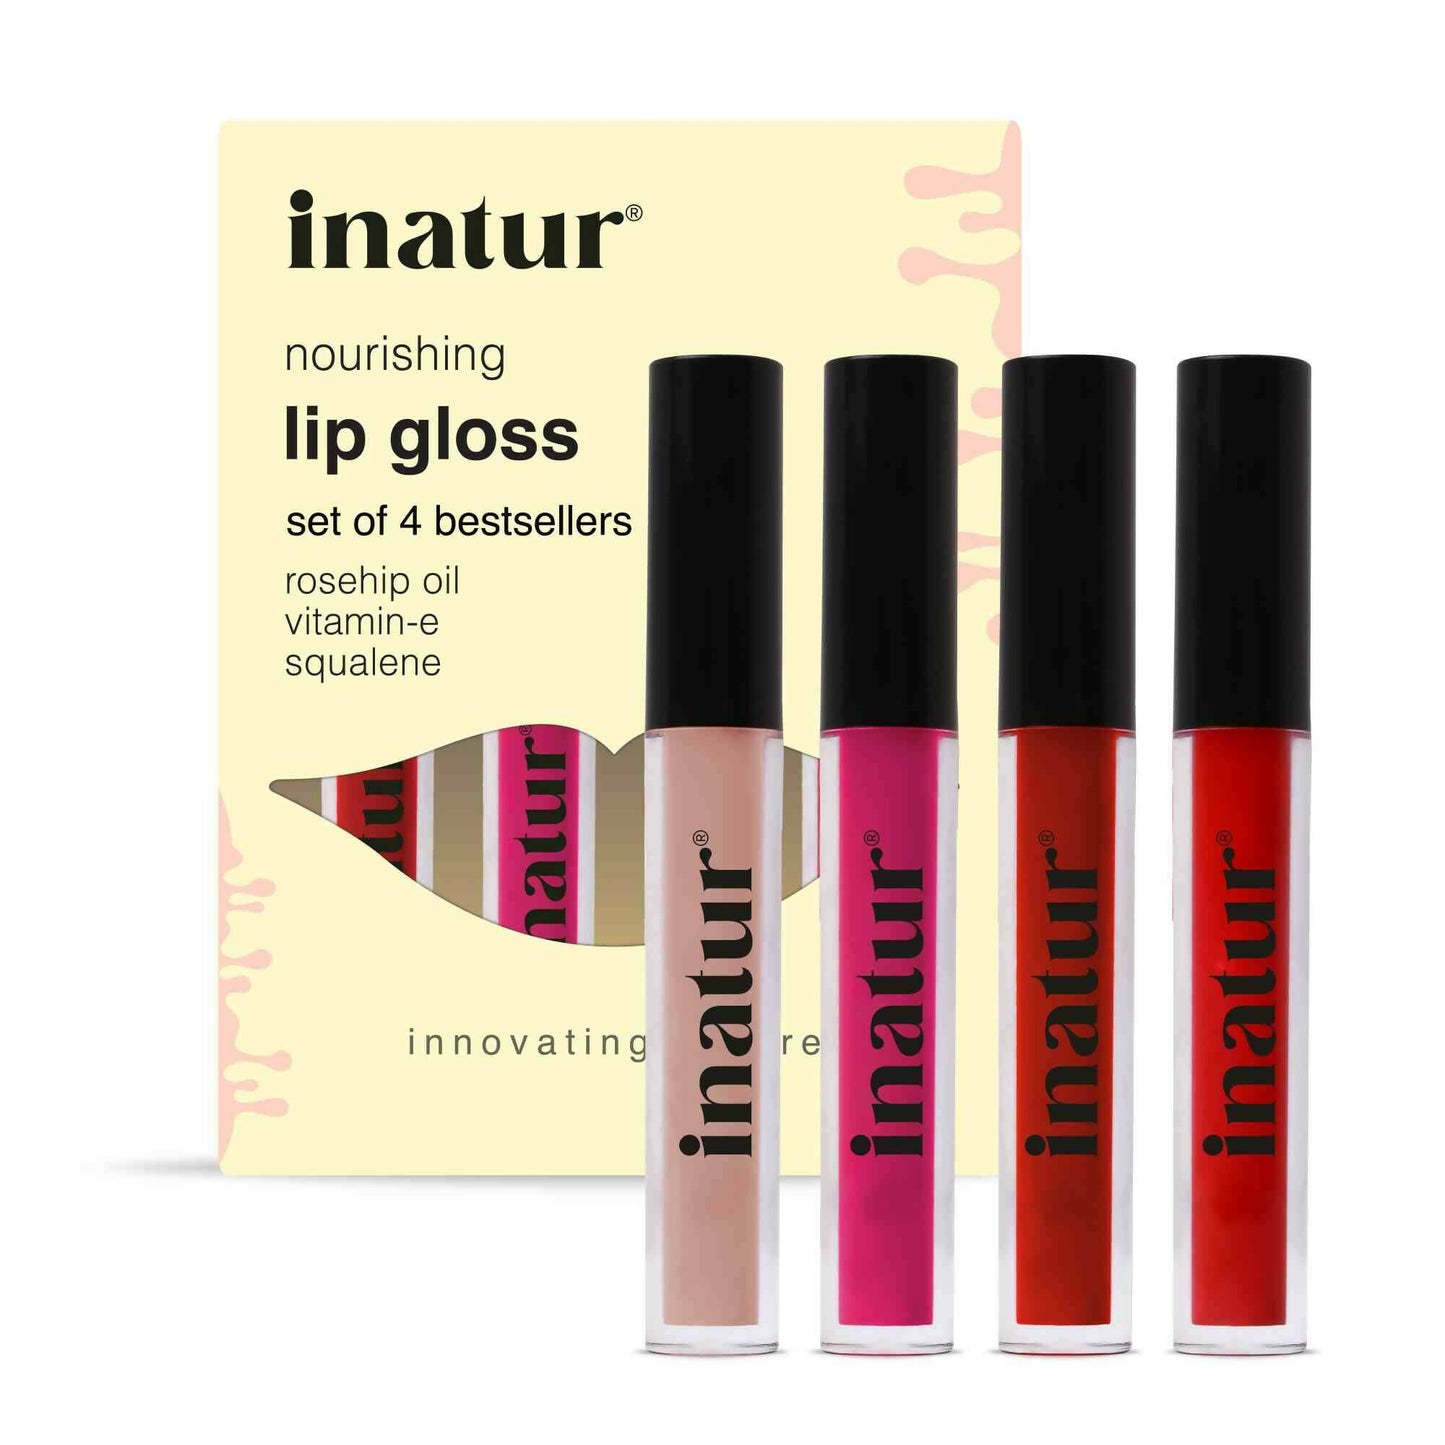 Inatur Lip Gloss Gift Box - BUDNE